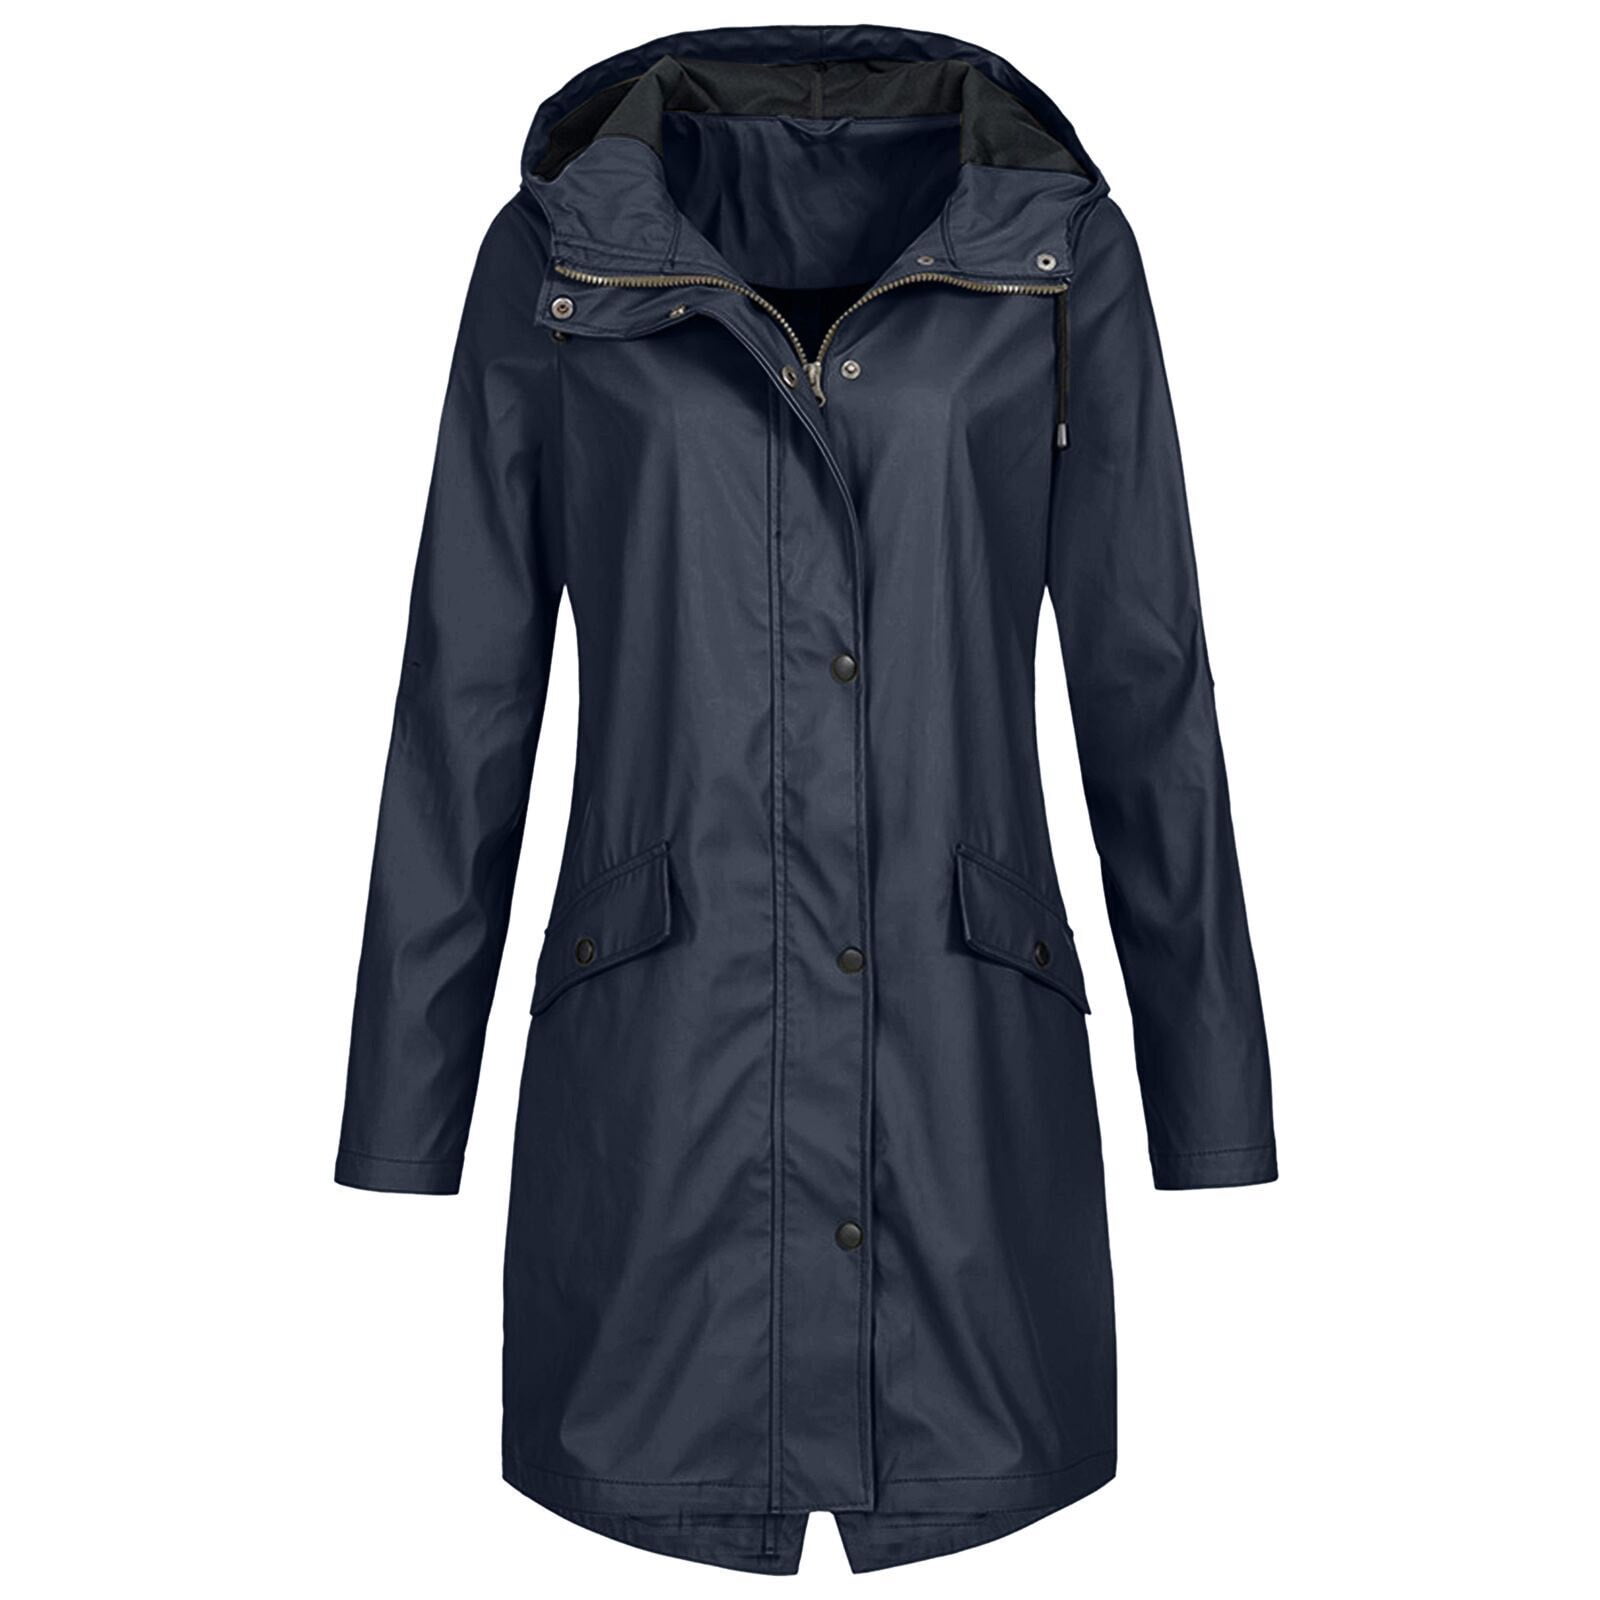 Frostluinai Rain Jackets For Women Waterproof Long Sleeve Lightweight ...